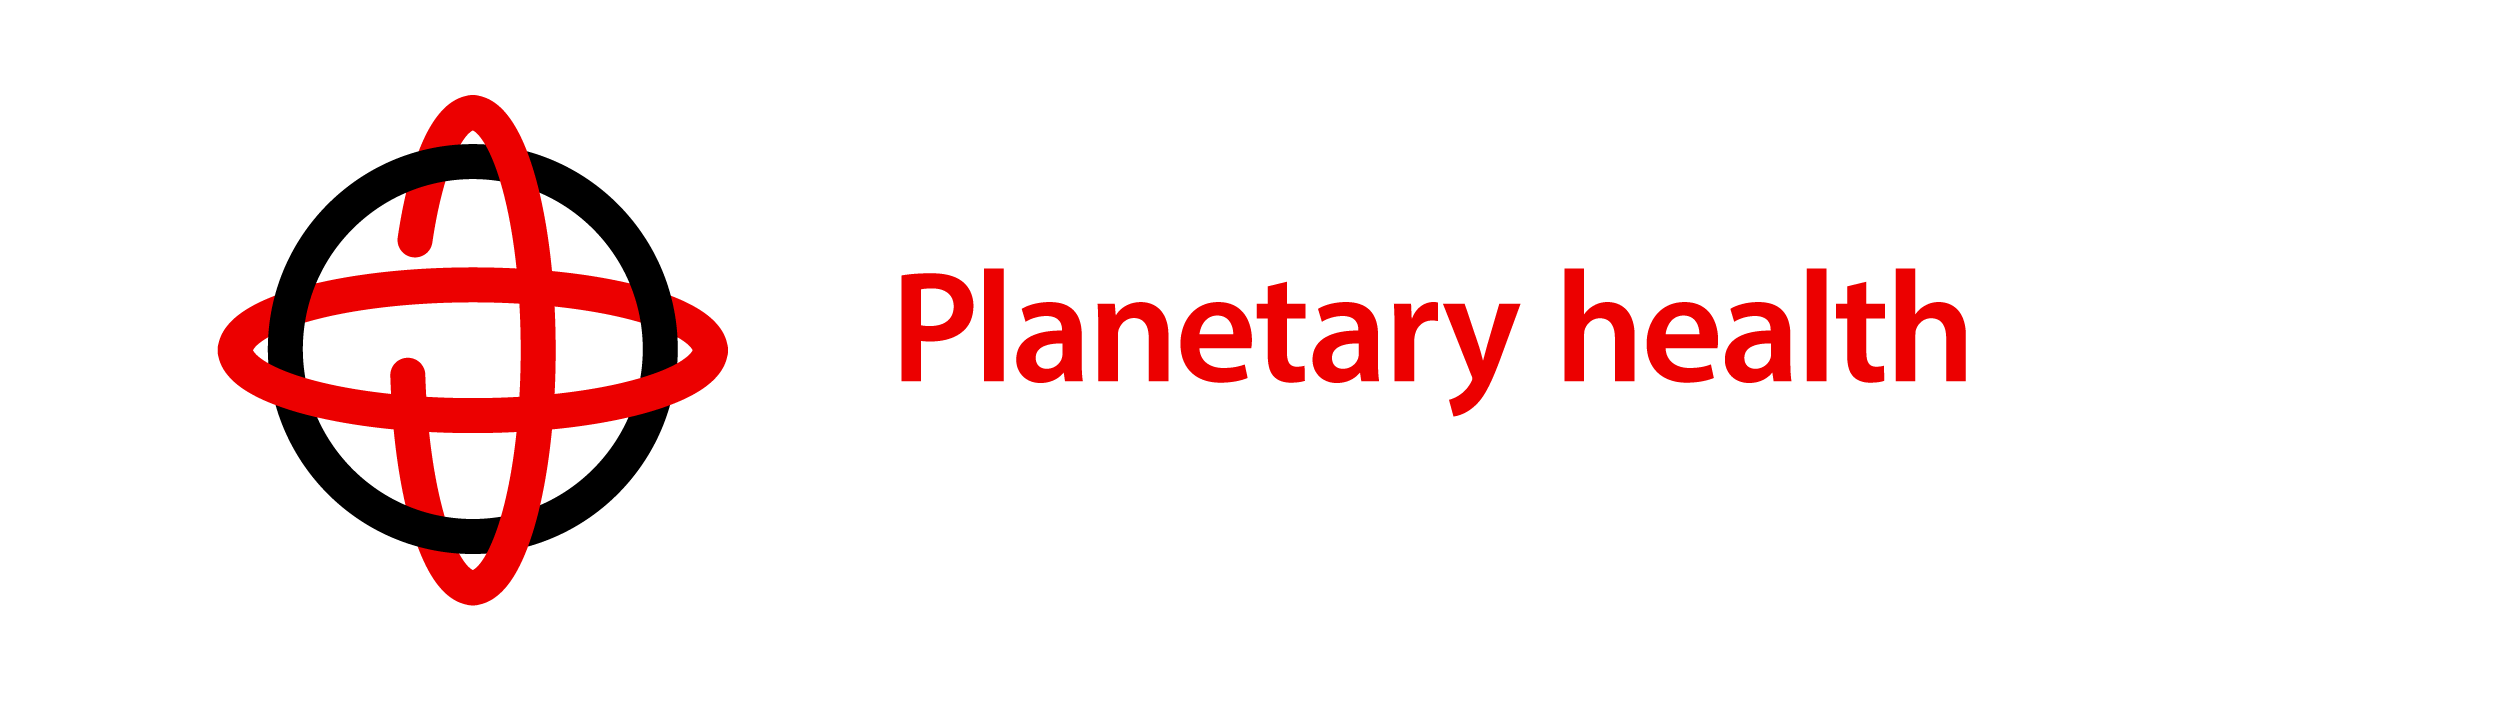 DNUS thema Planetary health